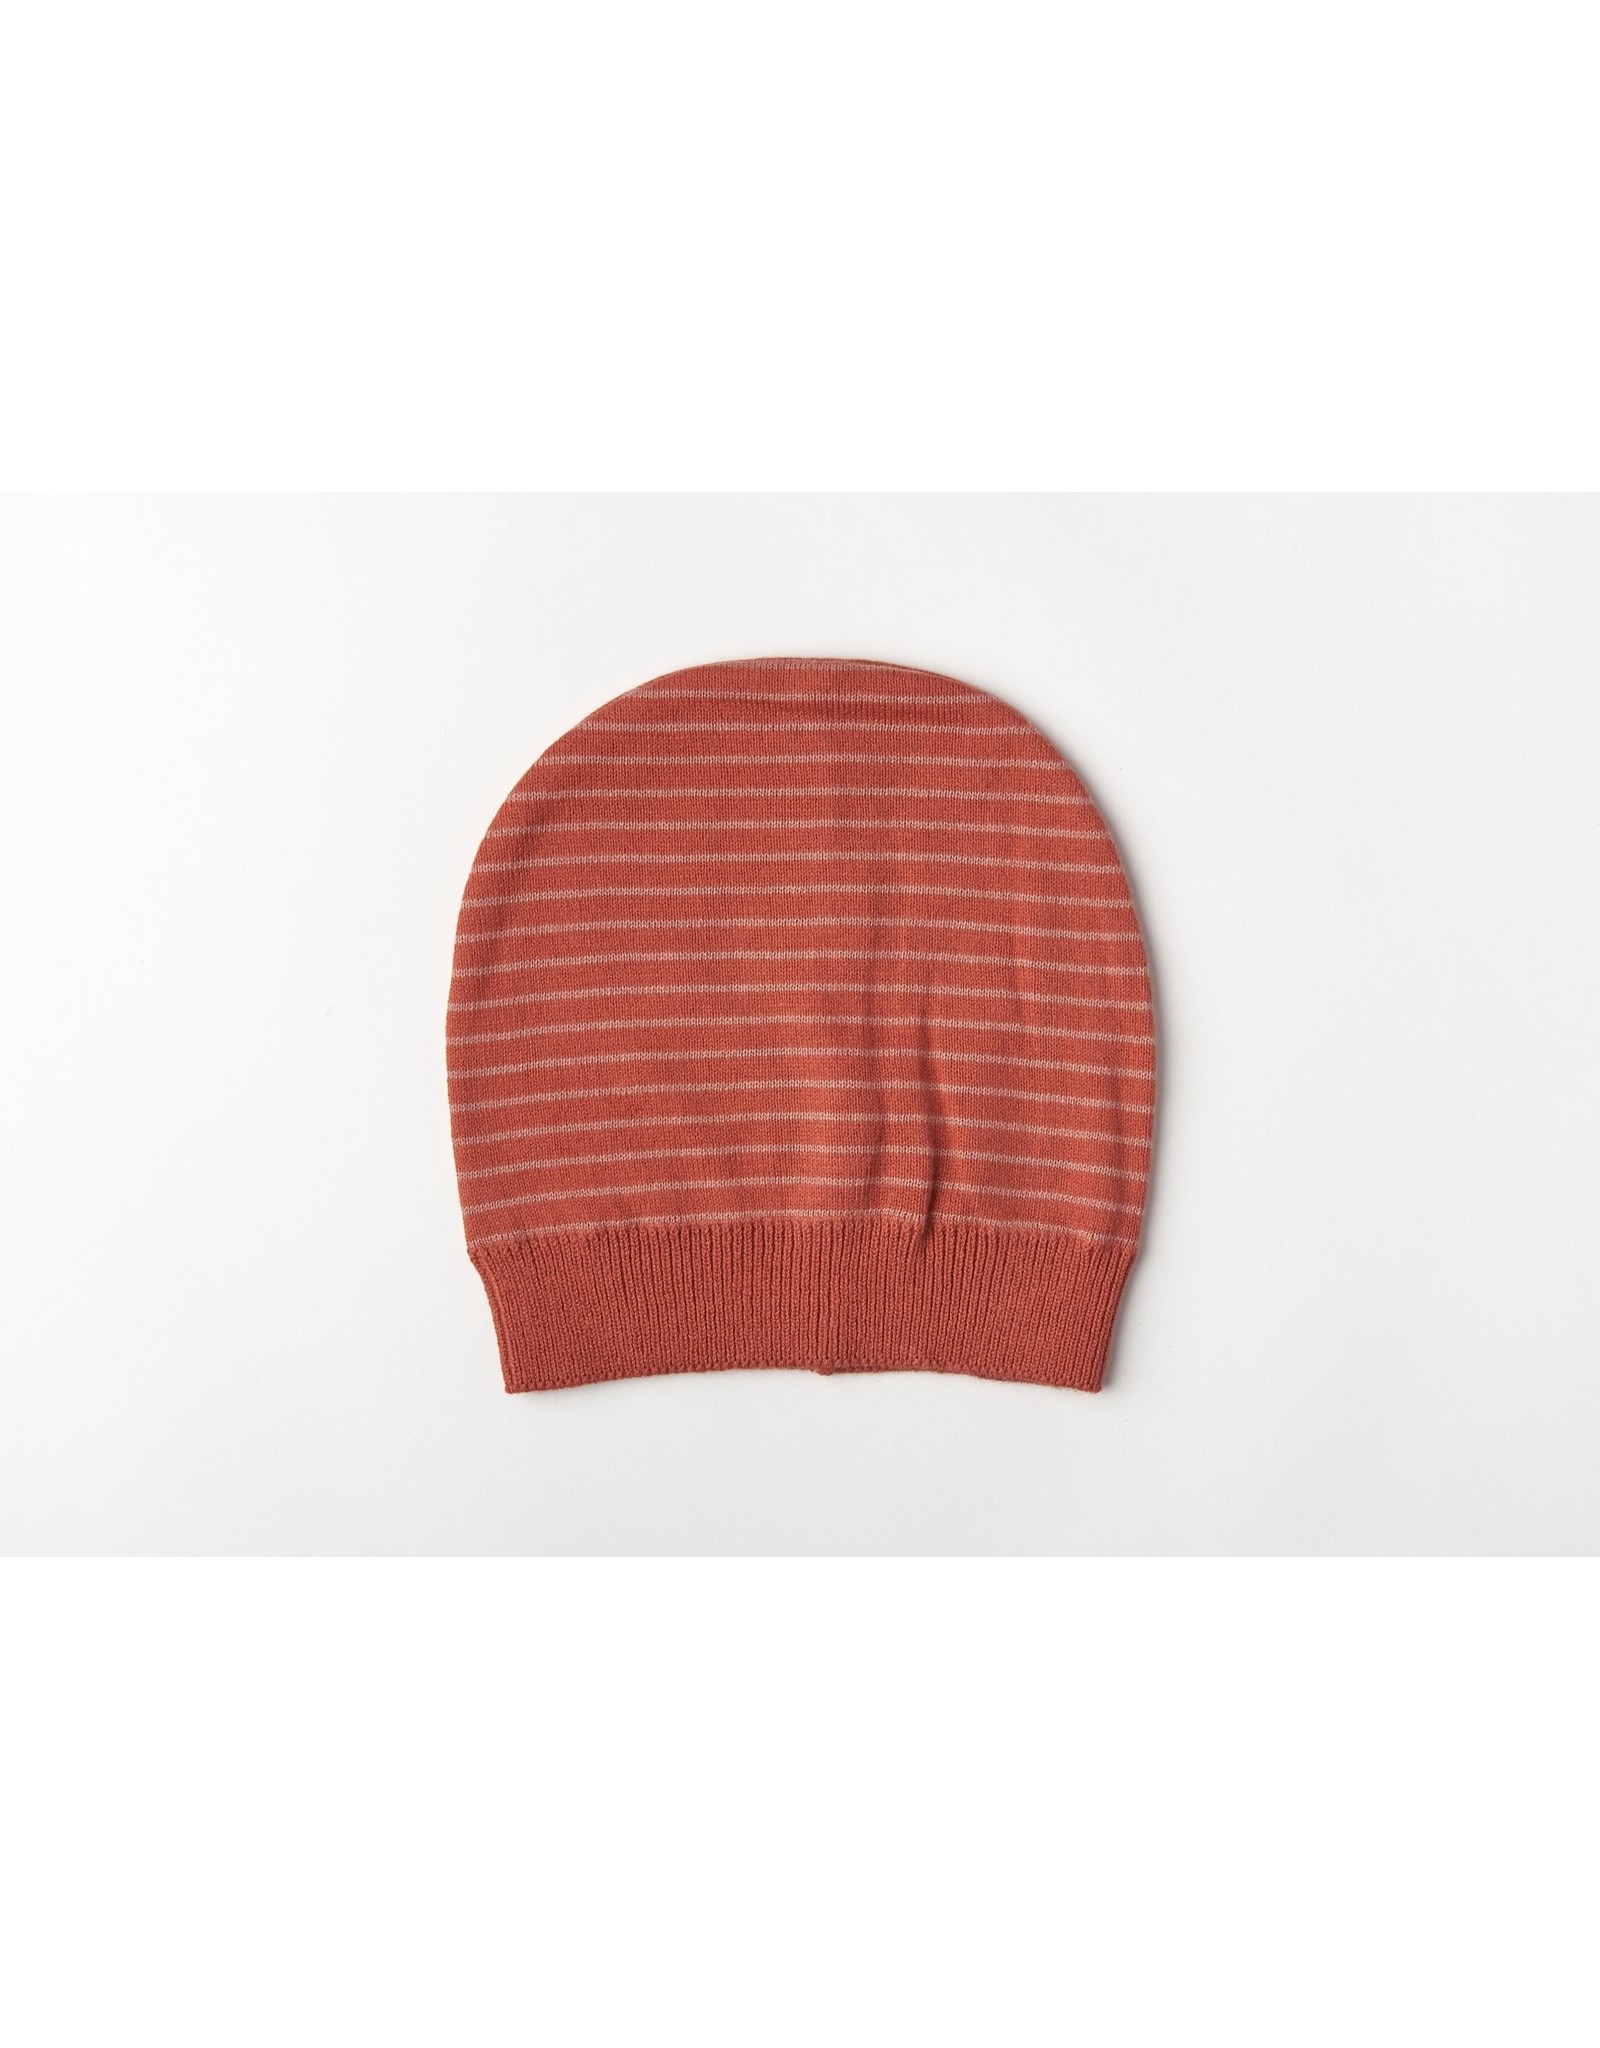 Mundo Melocoton Hat Organic Knitwear Stripes La Linea Chili